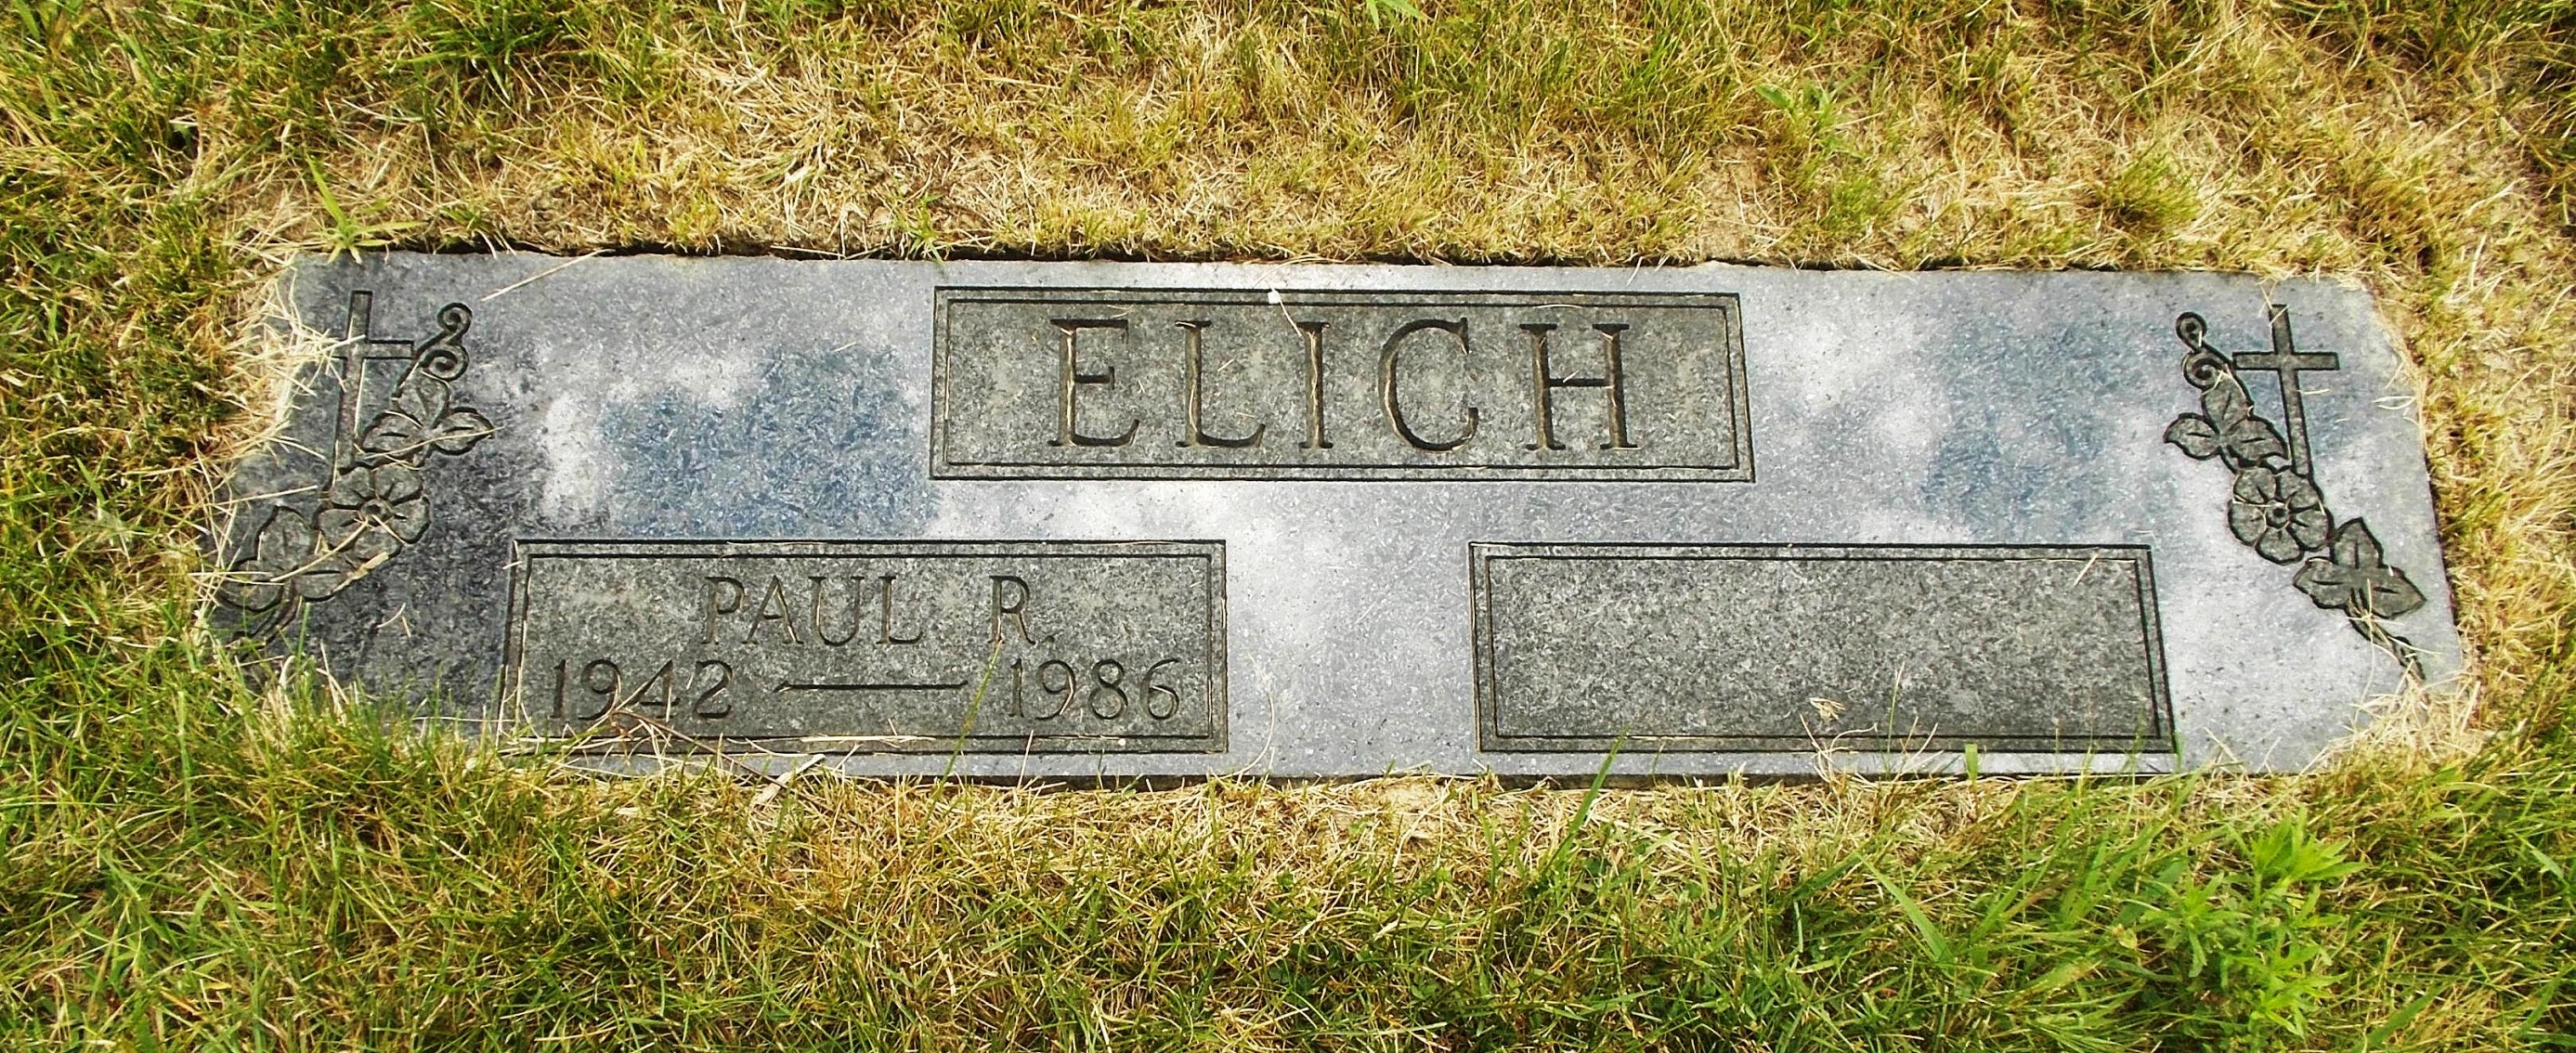 Paul R Elich